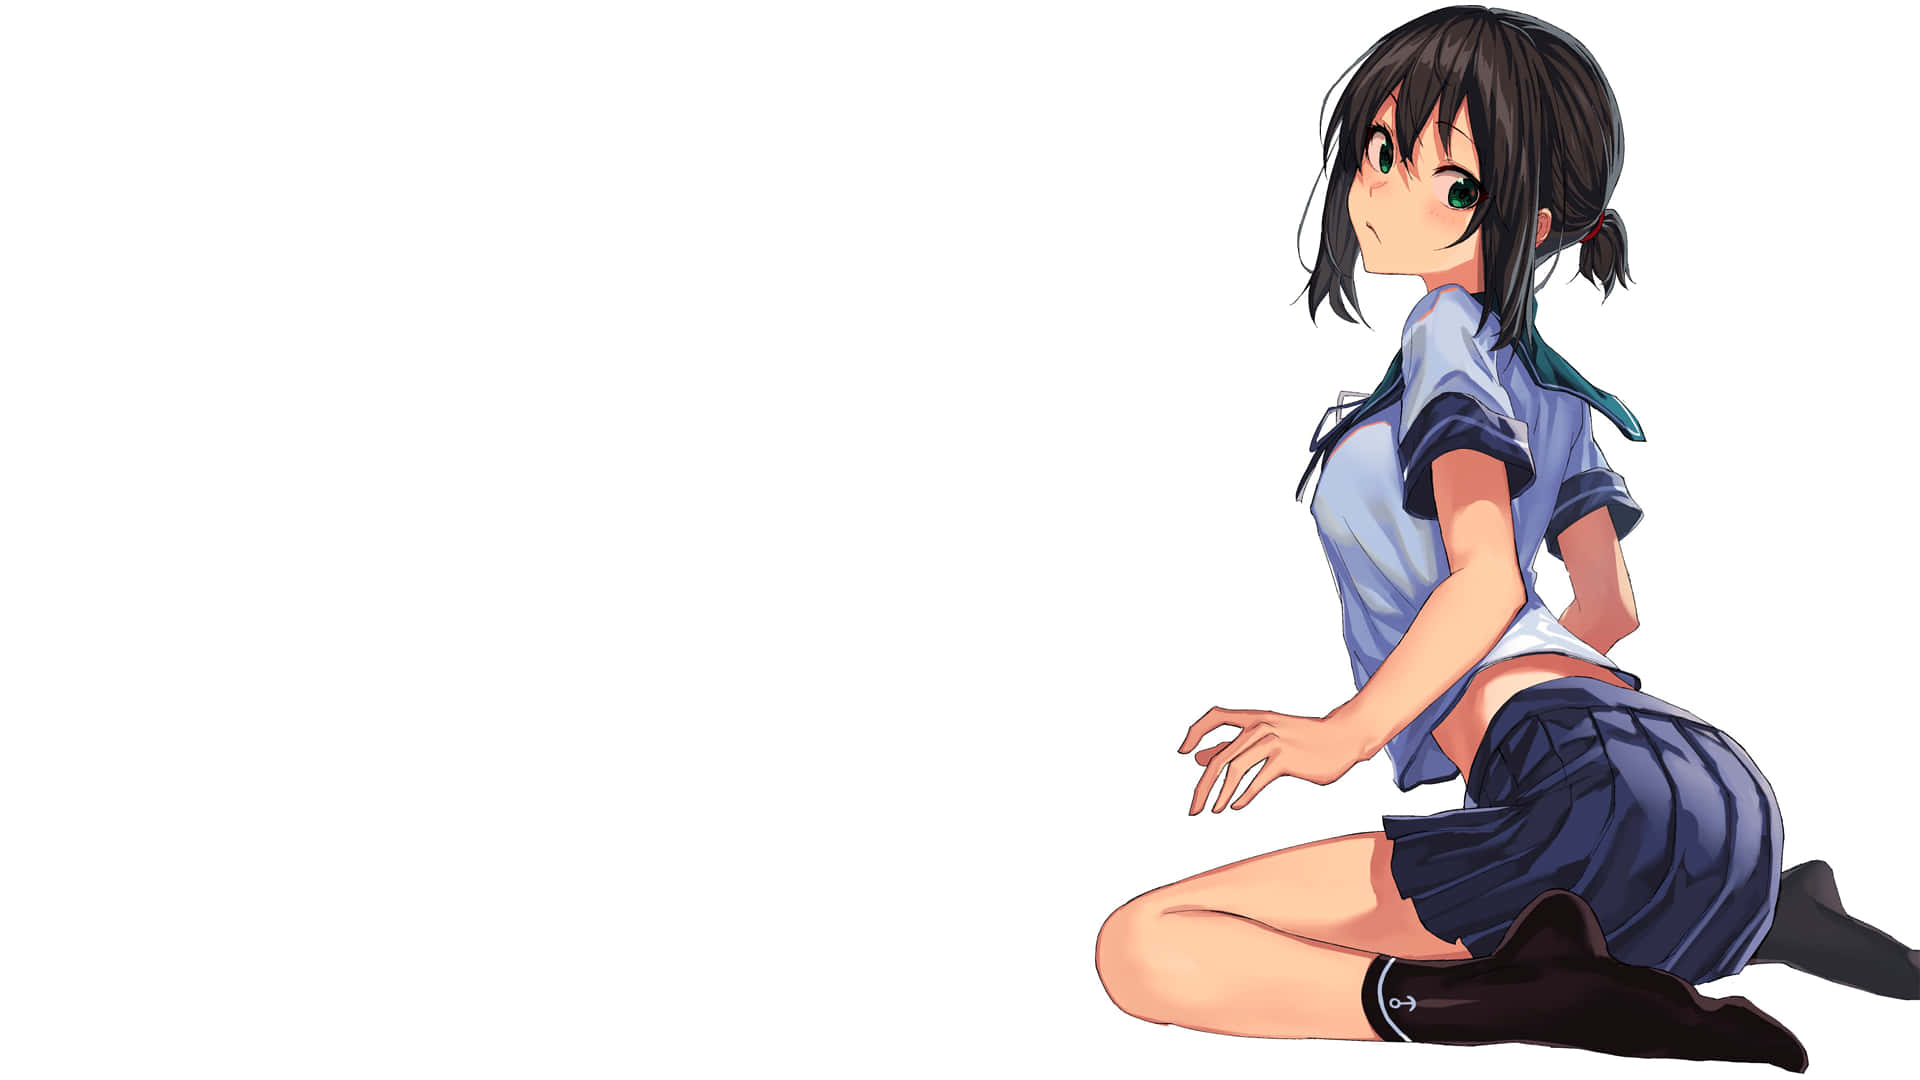 Hot Anime Girl Character Vector Illustration Stock Vector (Royalty Free)  2320167703 | Shutterstock